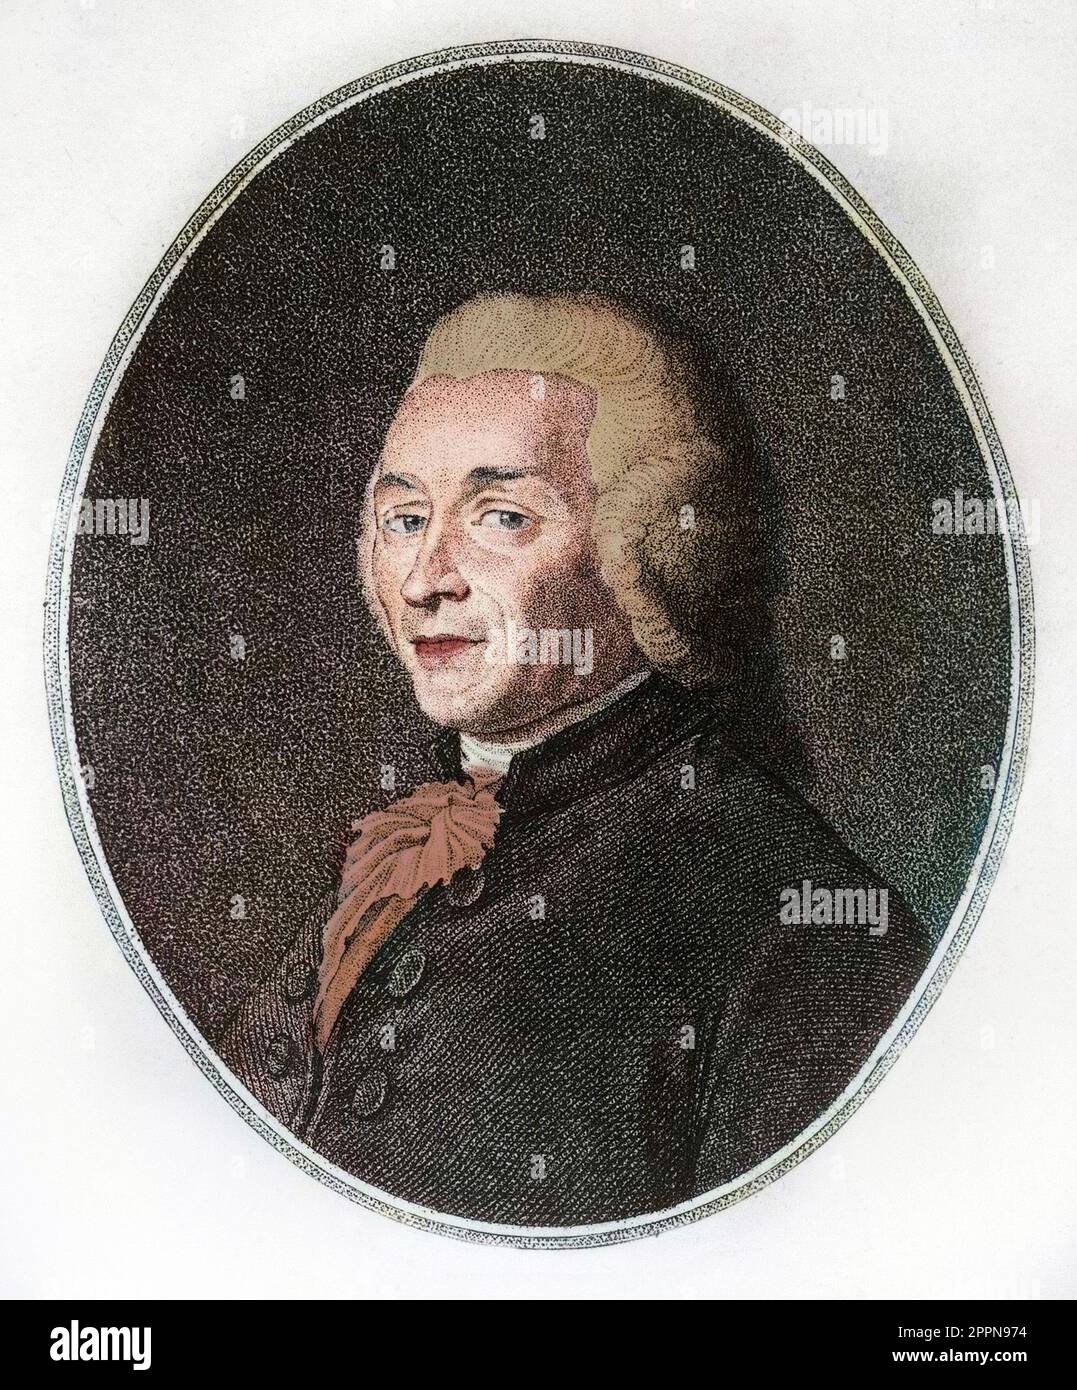 'Portrait du medecin francais Joseph Ignace Guillotin (1738-1814)' (Portrait of the french physician Joseph-Ignace Guillotin) Stock Photo